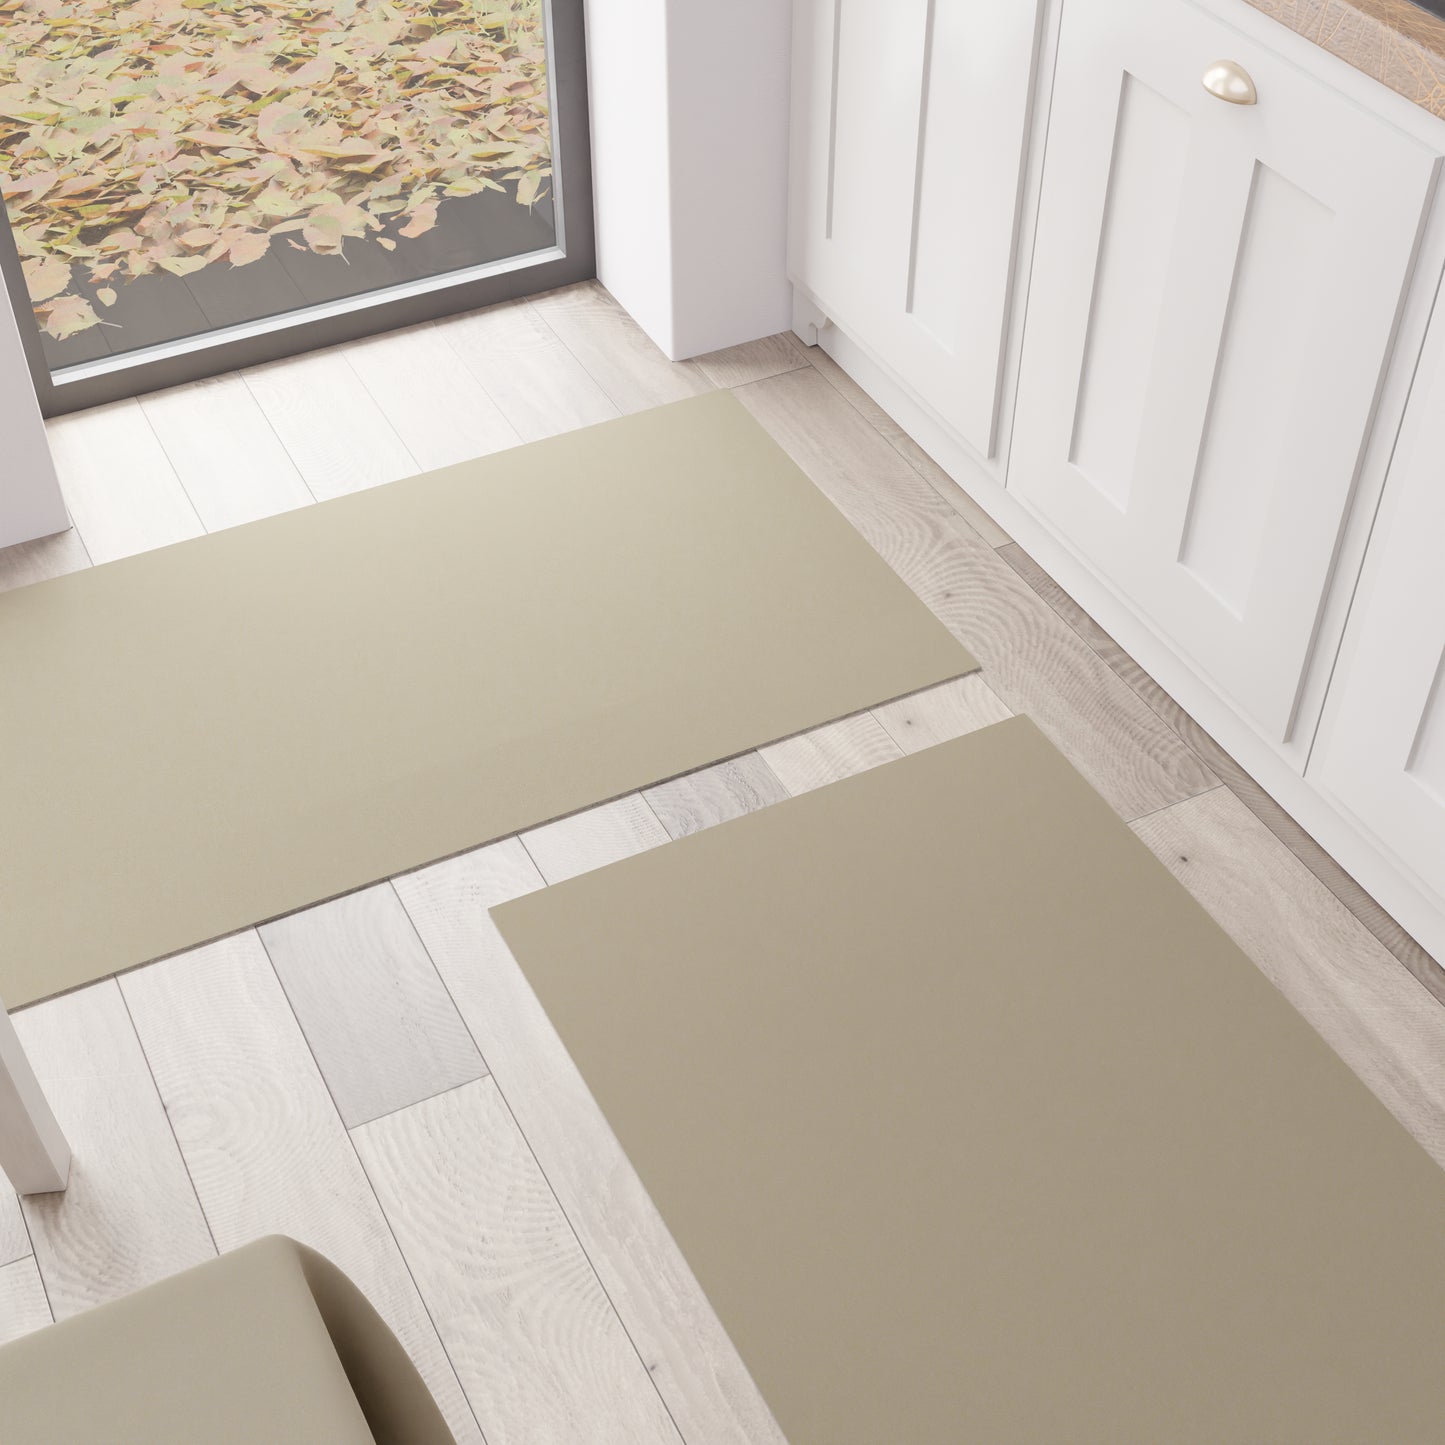 Kitchen carpet, kitchen runner, solid color dove grey